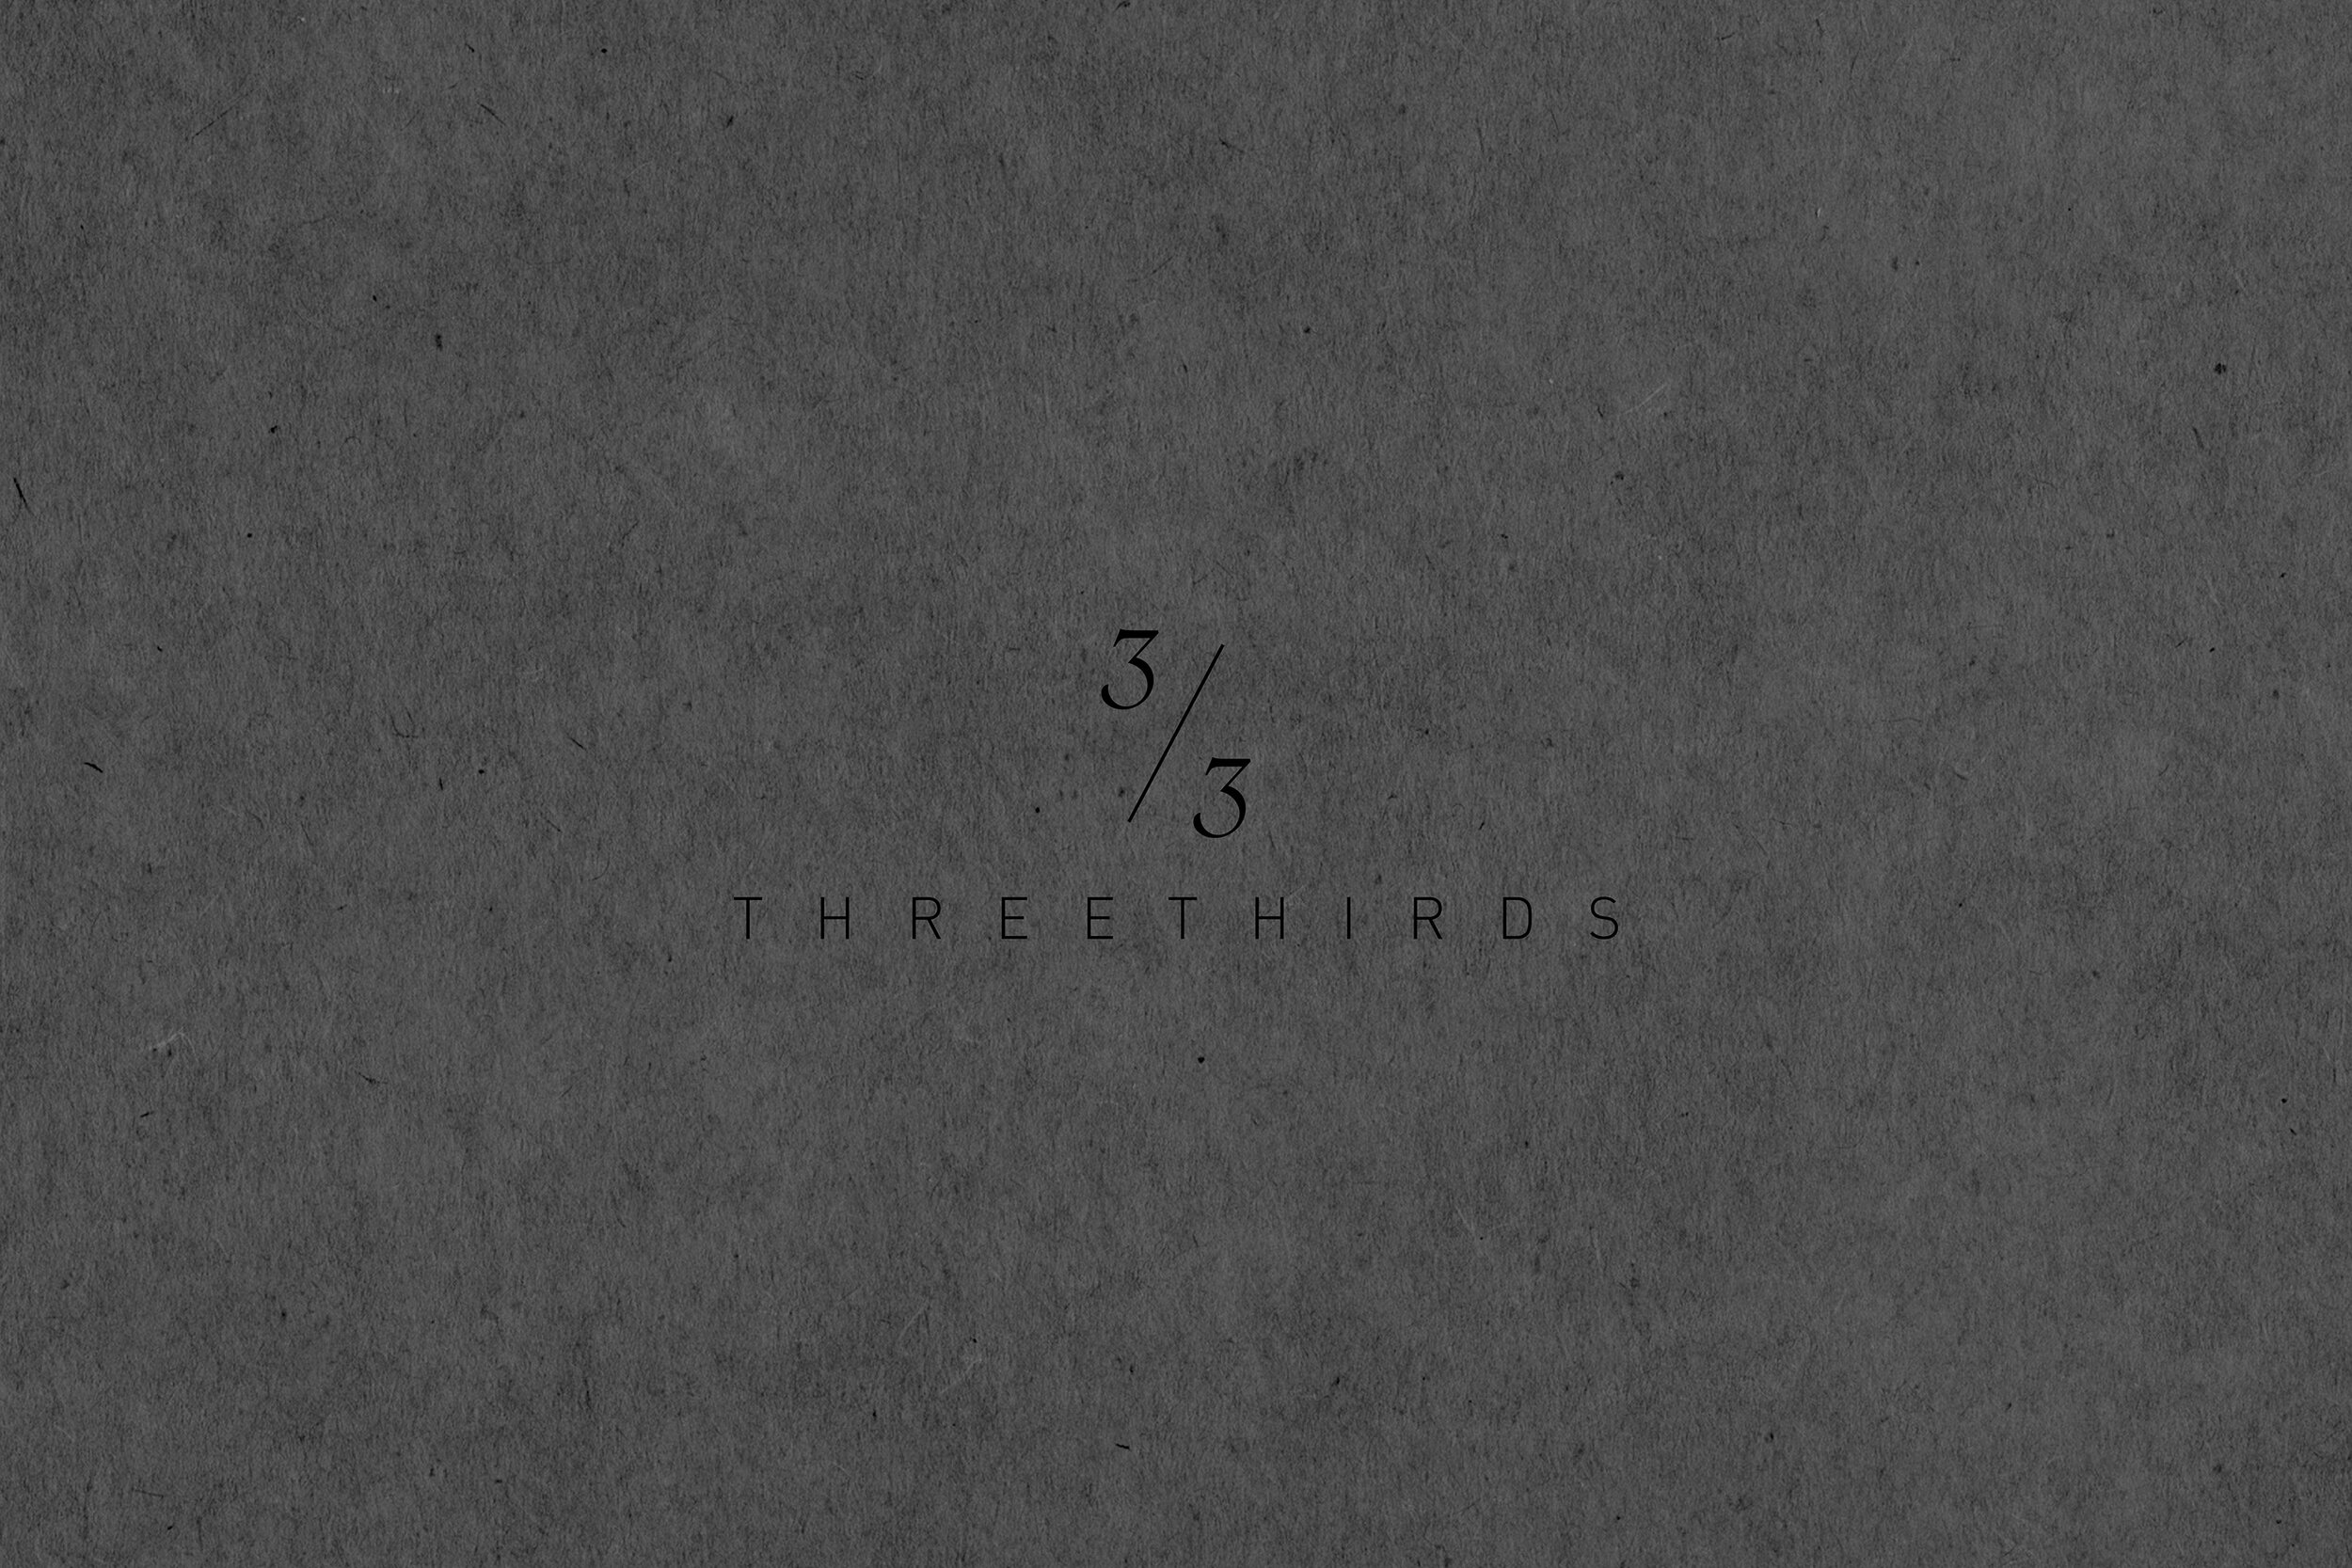 THREETHIRDS-09.jpg